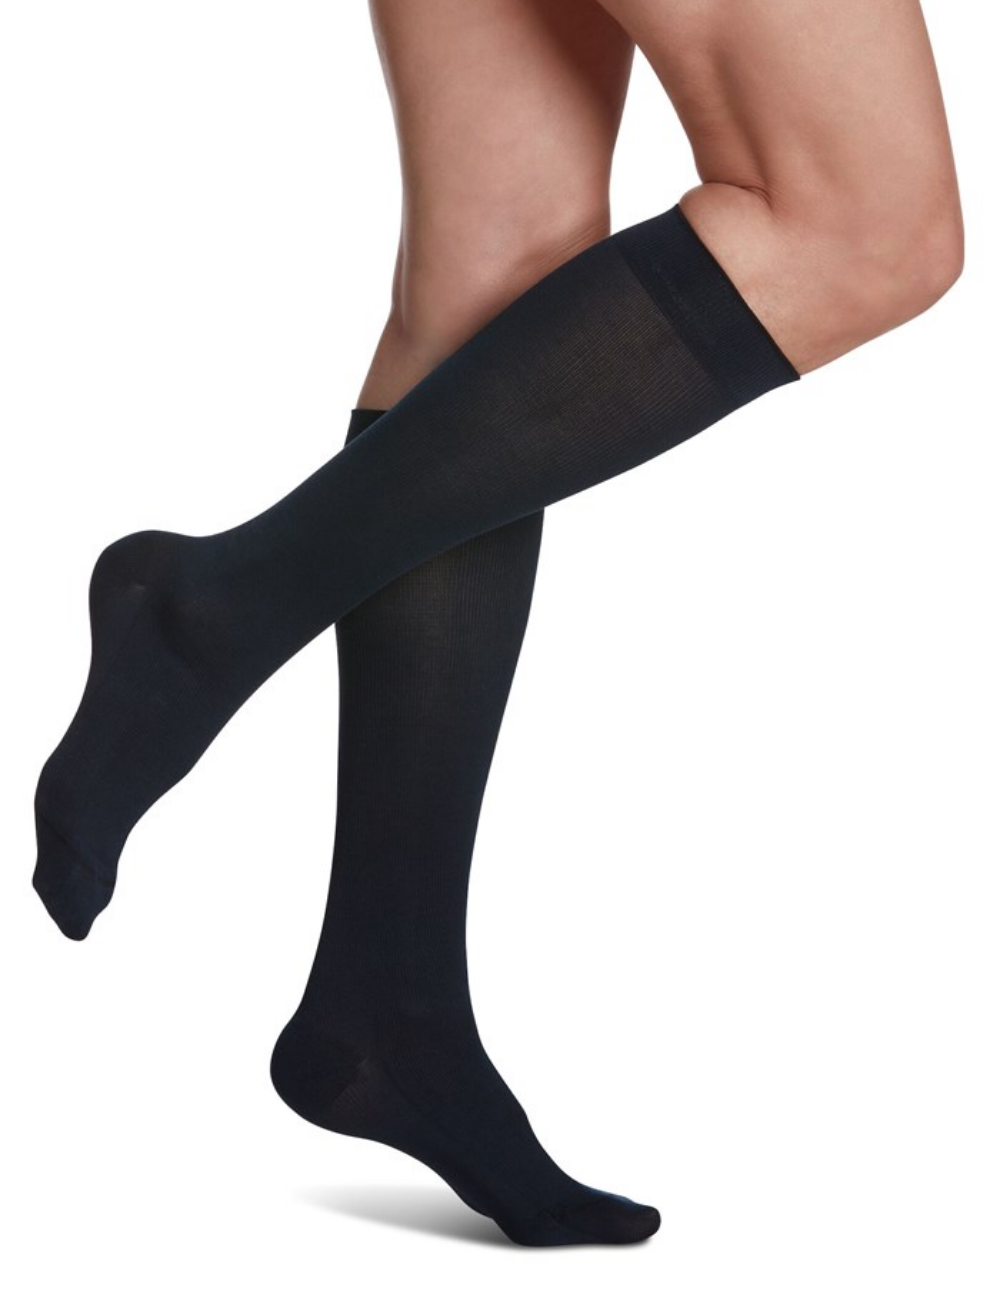 Zipper Compression Socks Open Toe for Men Women Knee High Support Hose  20-30mmHg